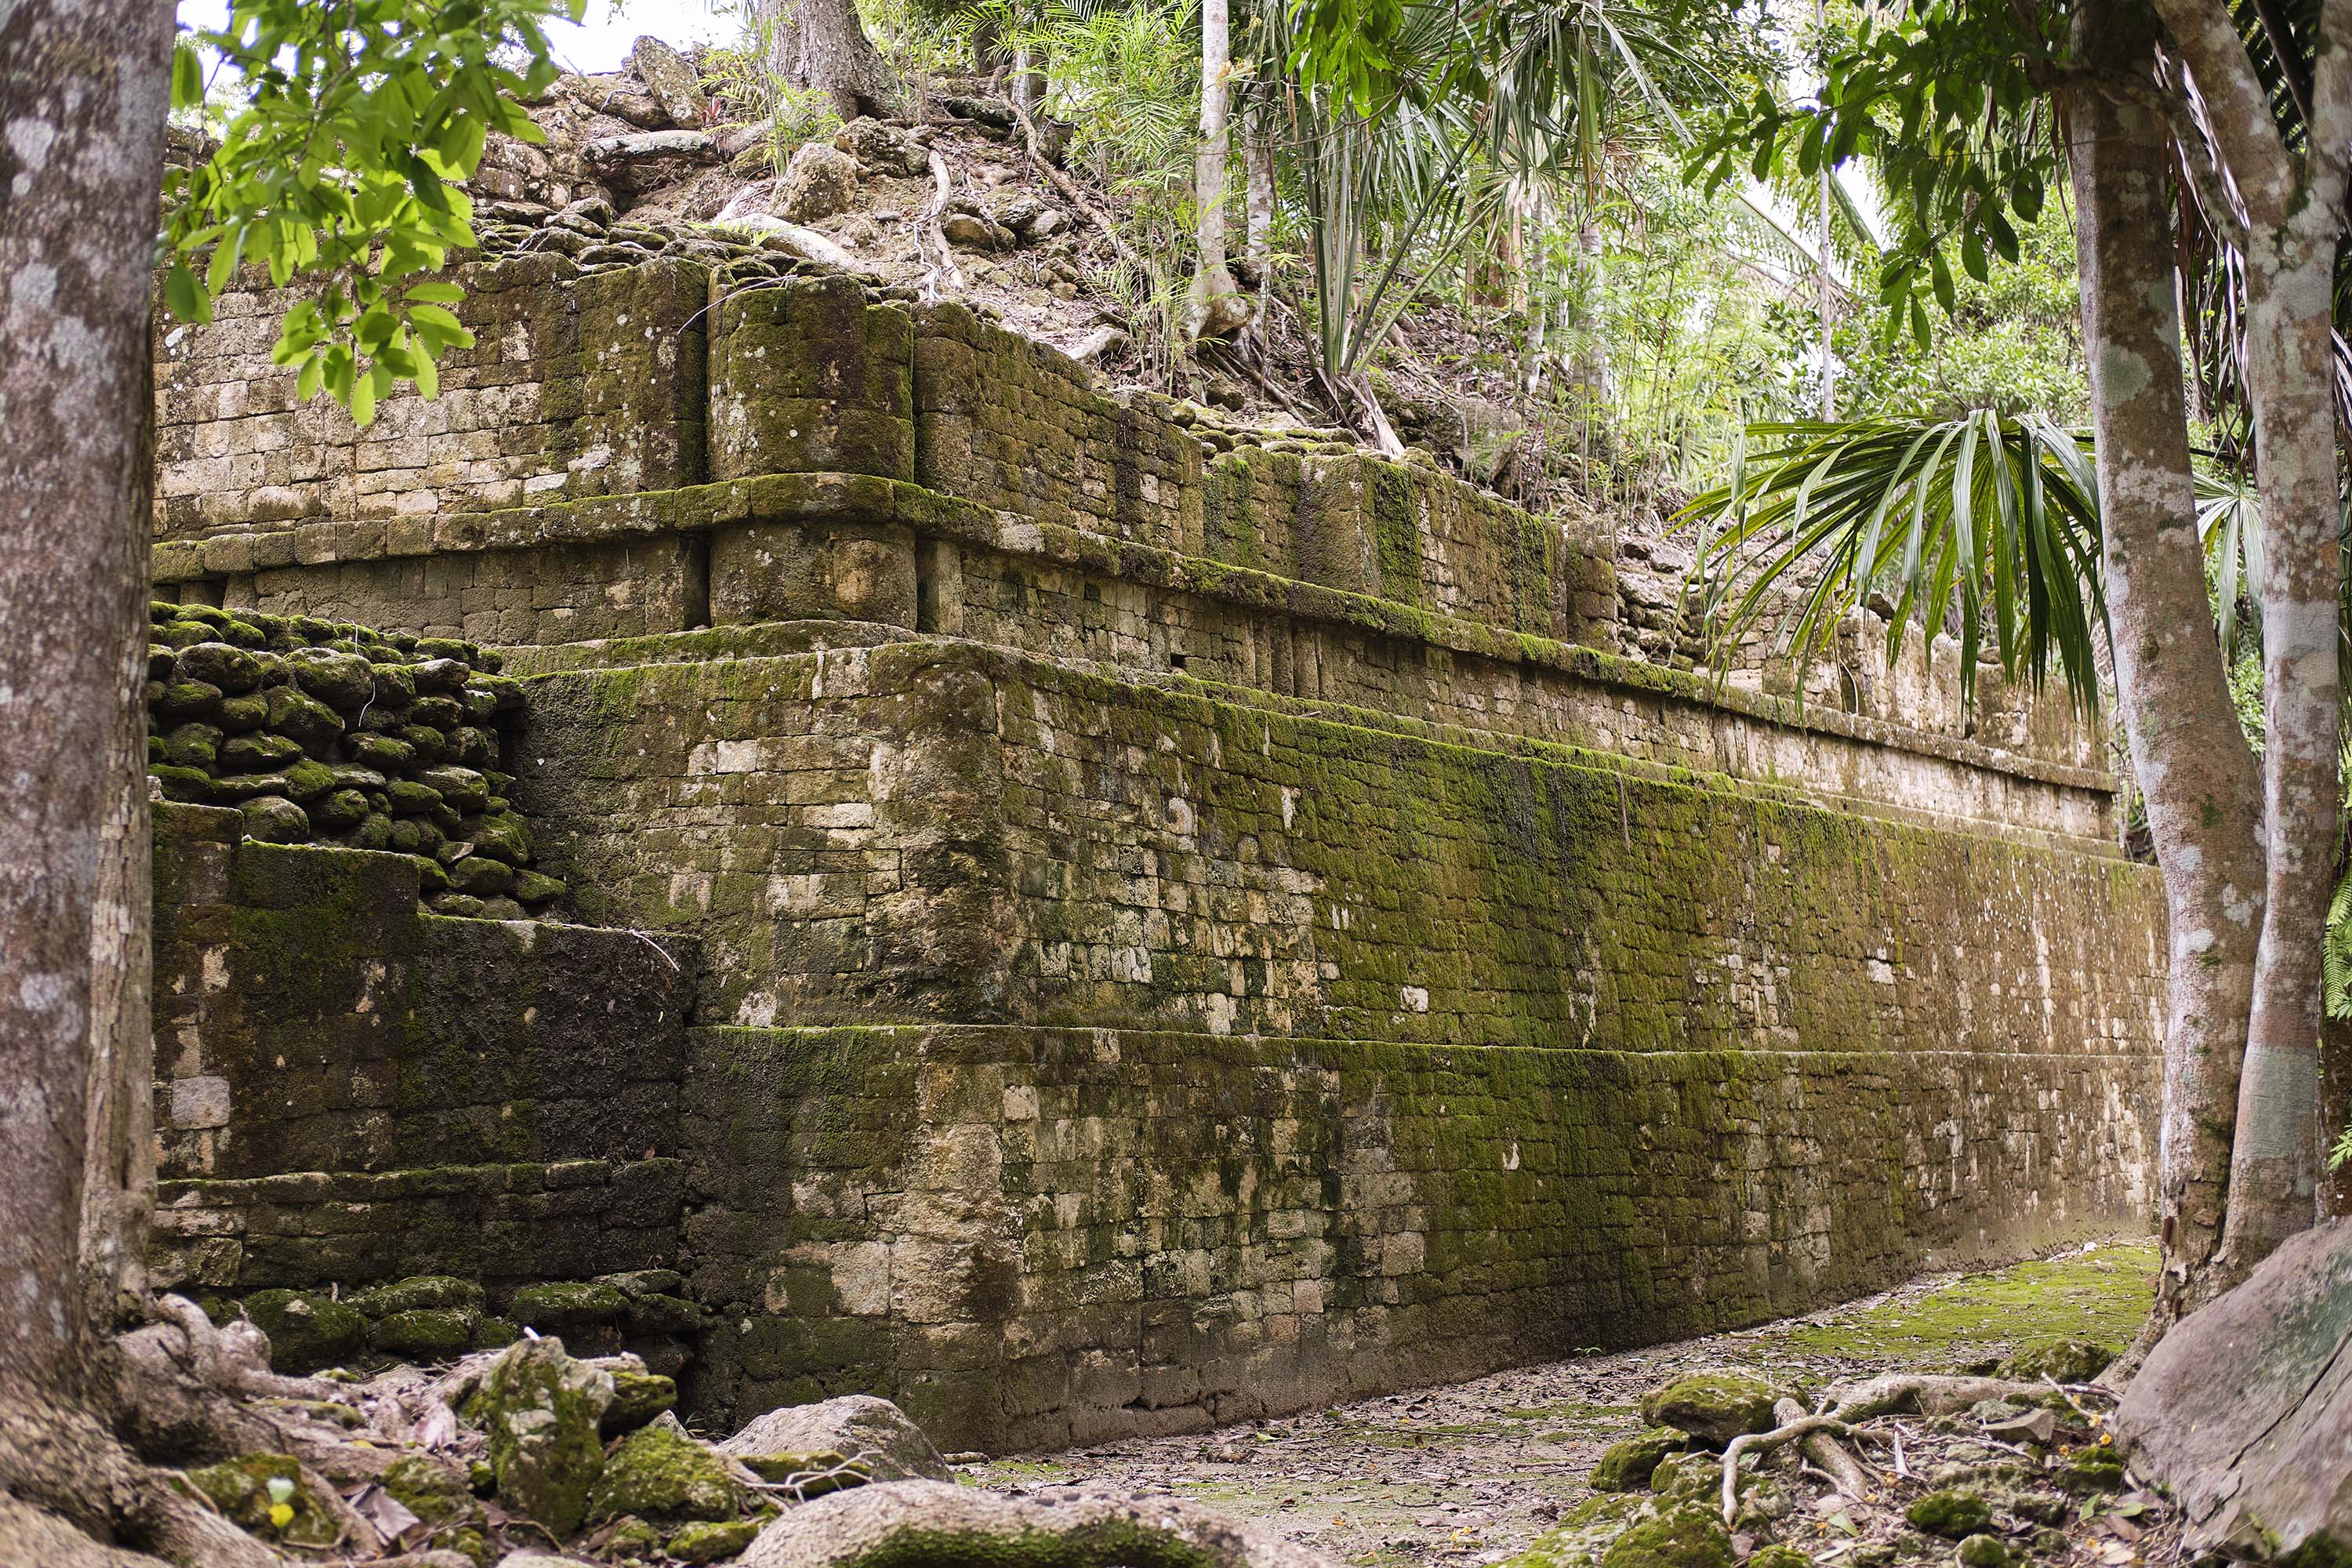 kohunlich mayan ruins tour